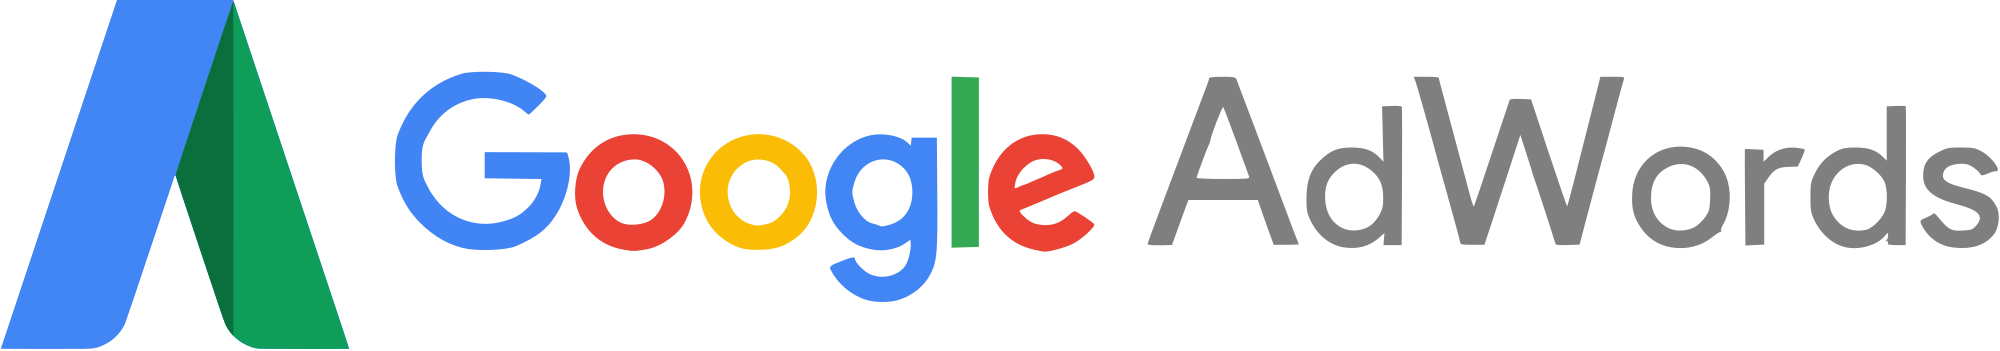 Google Adwords Logo PNG-PlusP